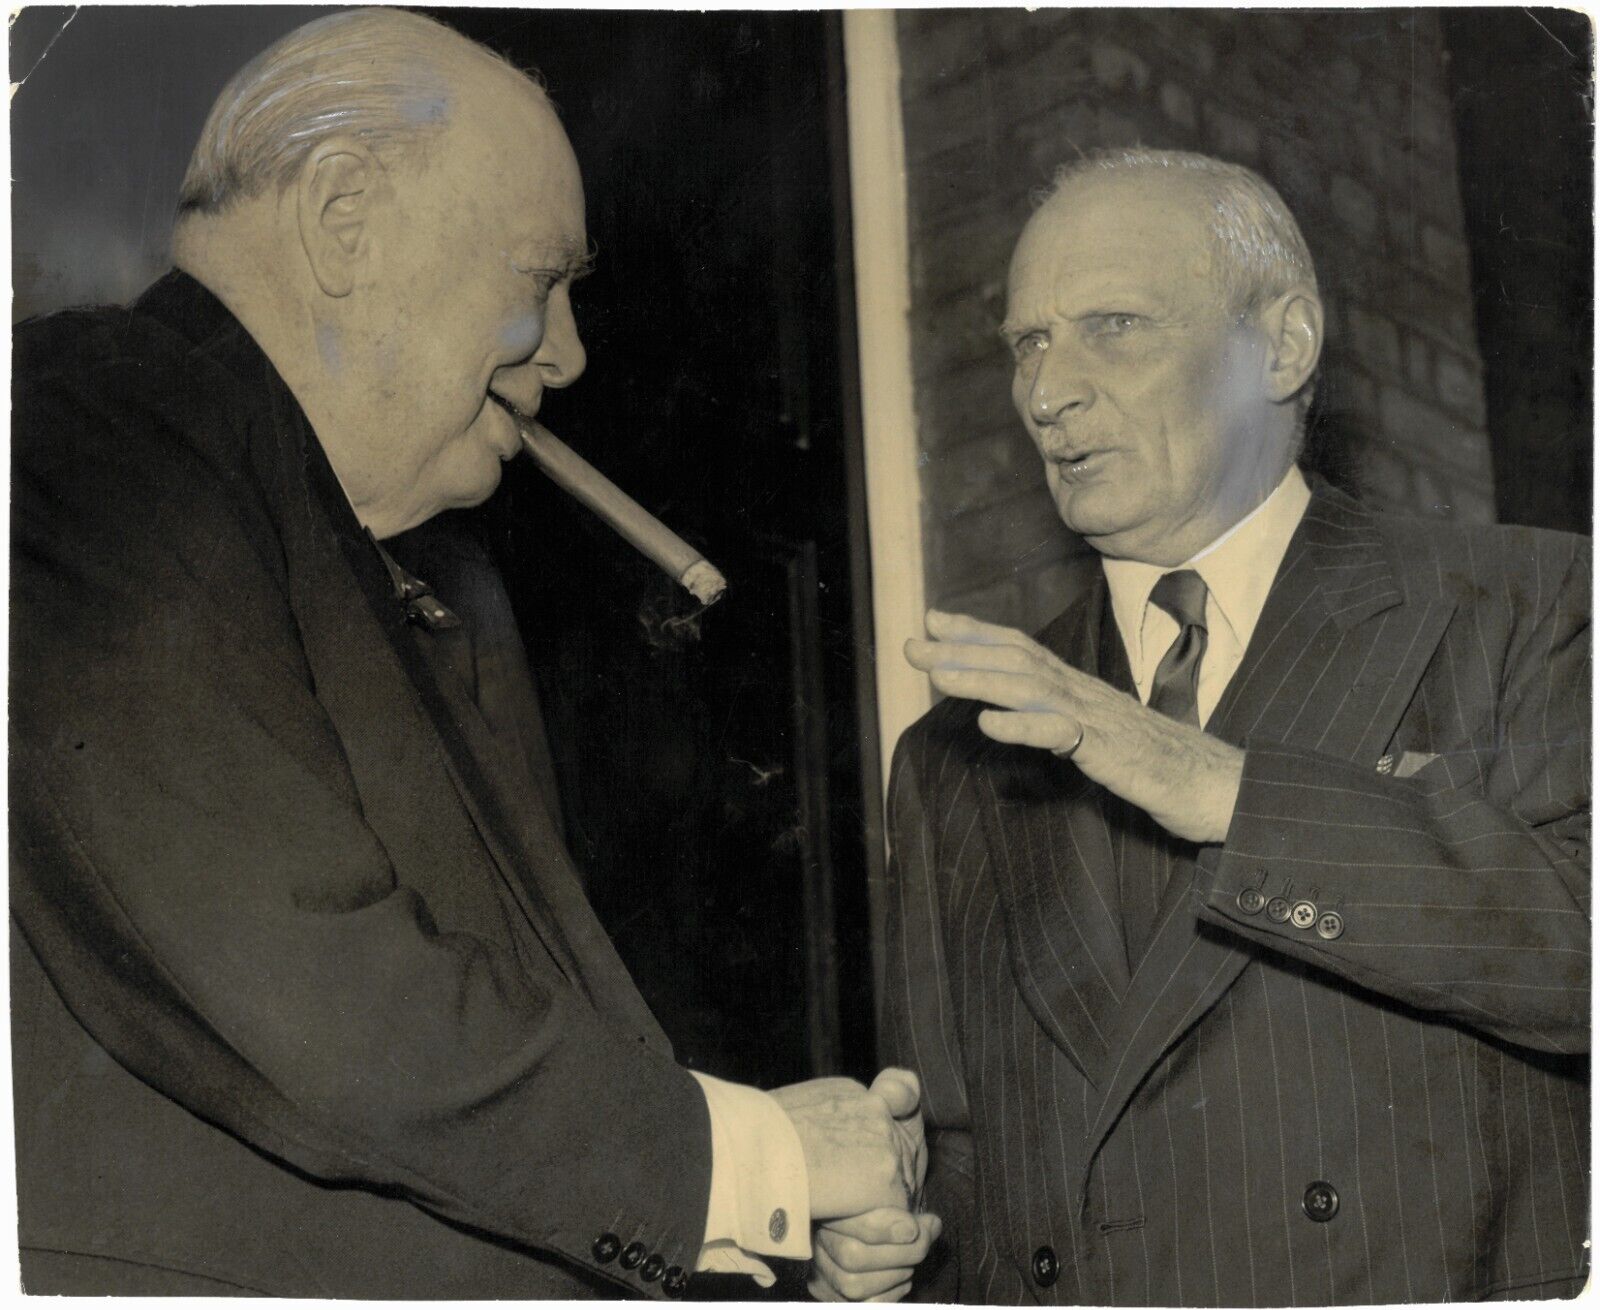 September 1956 press photo of Winston Churchill with Bernard Montgomary